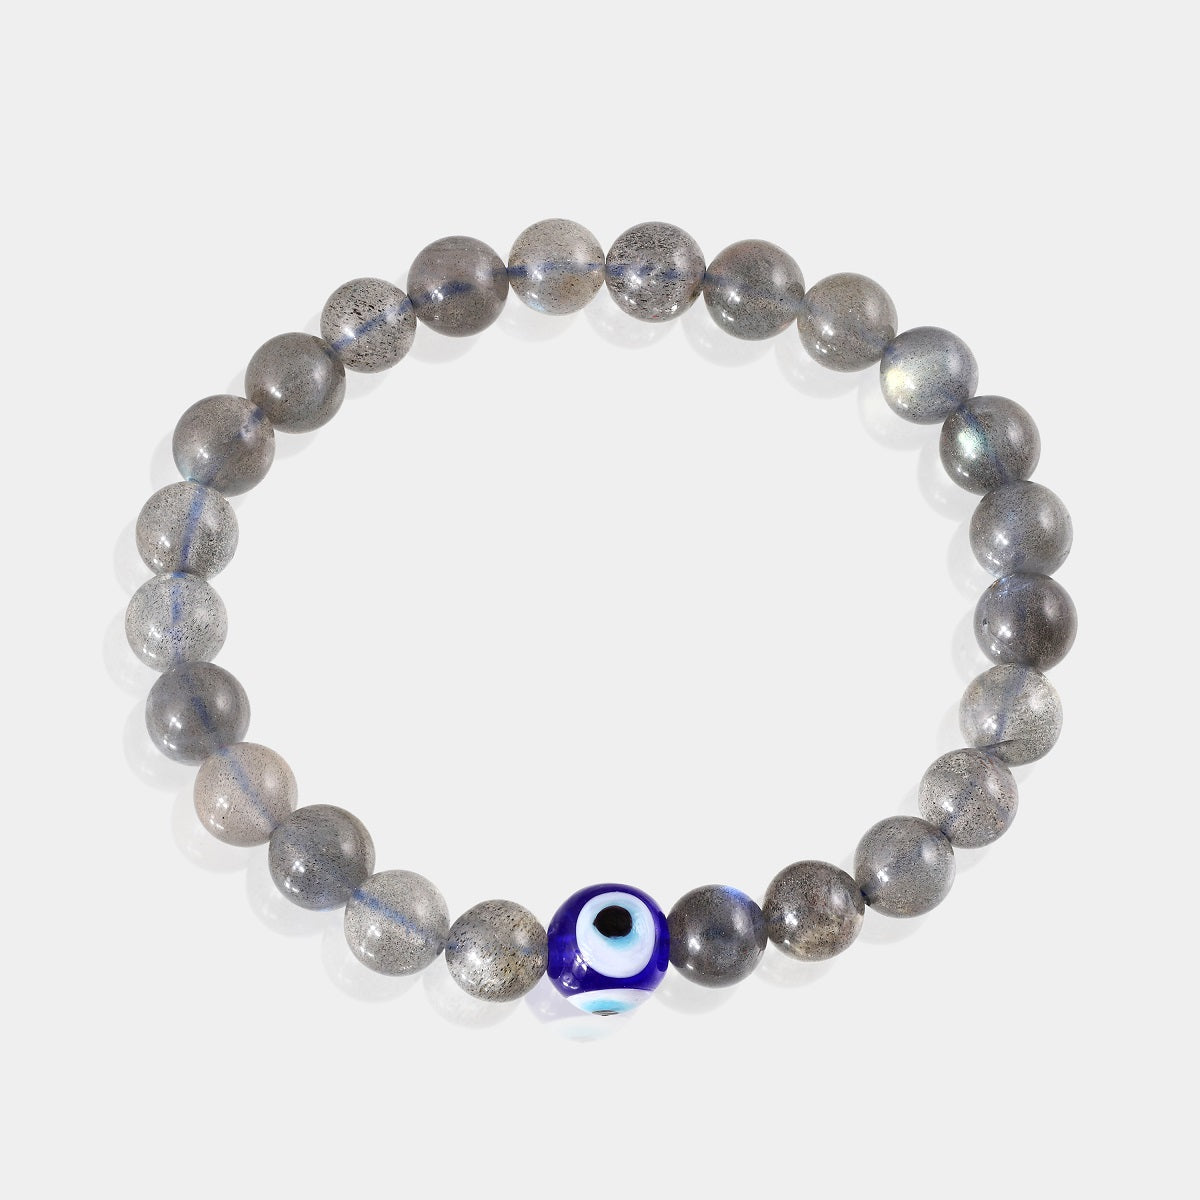 Smooth Round Gray Labradorite Gemstone Beads